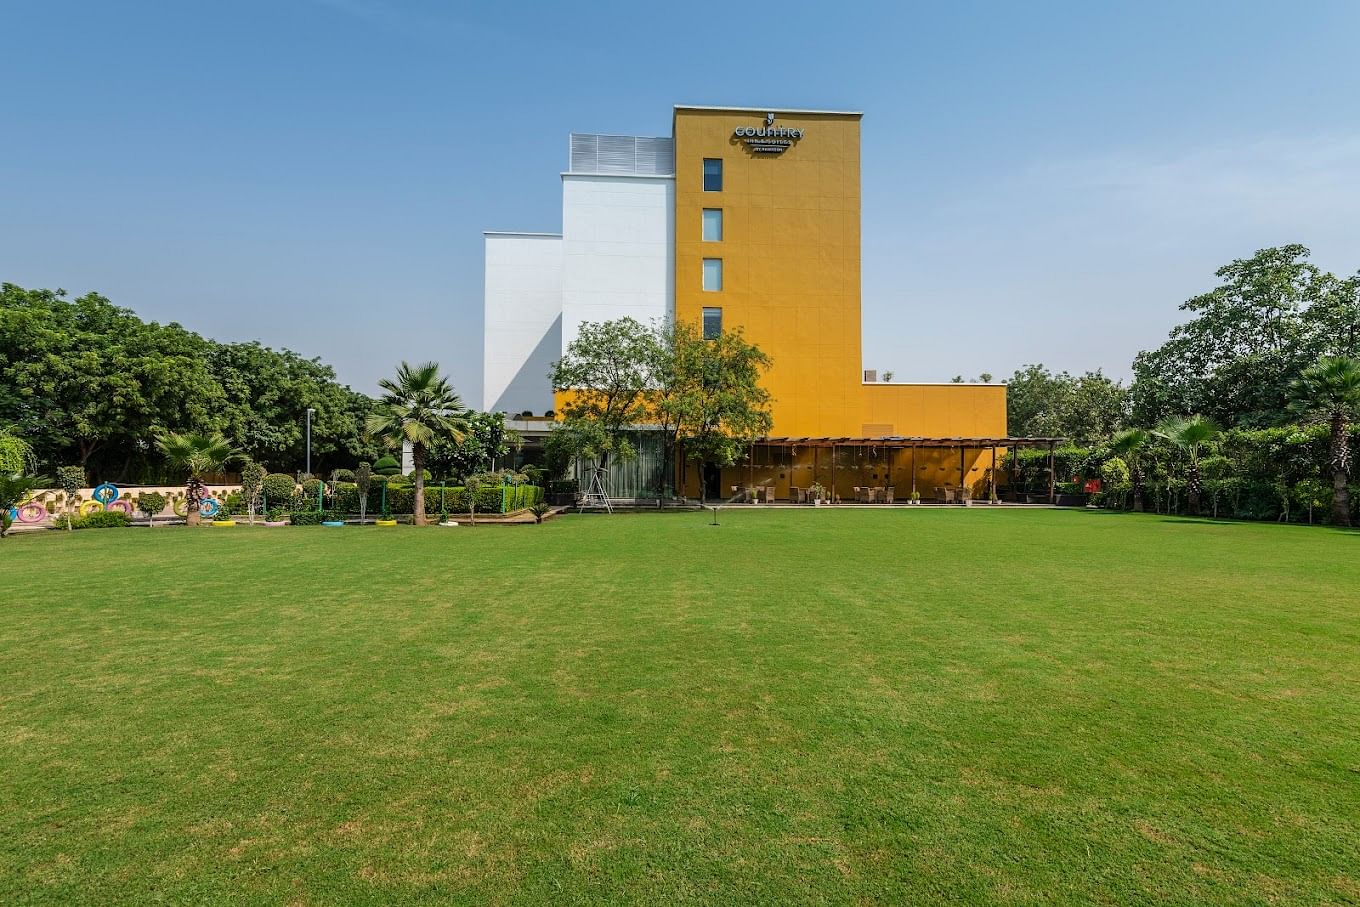 Country Inn Suites in Sohna Road, Gurgaon